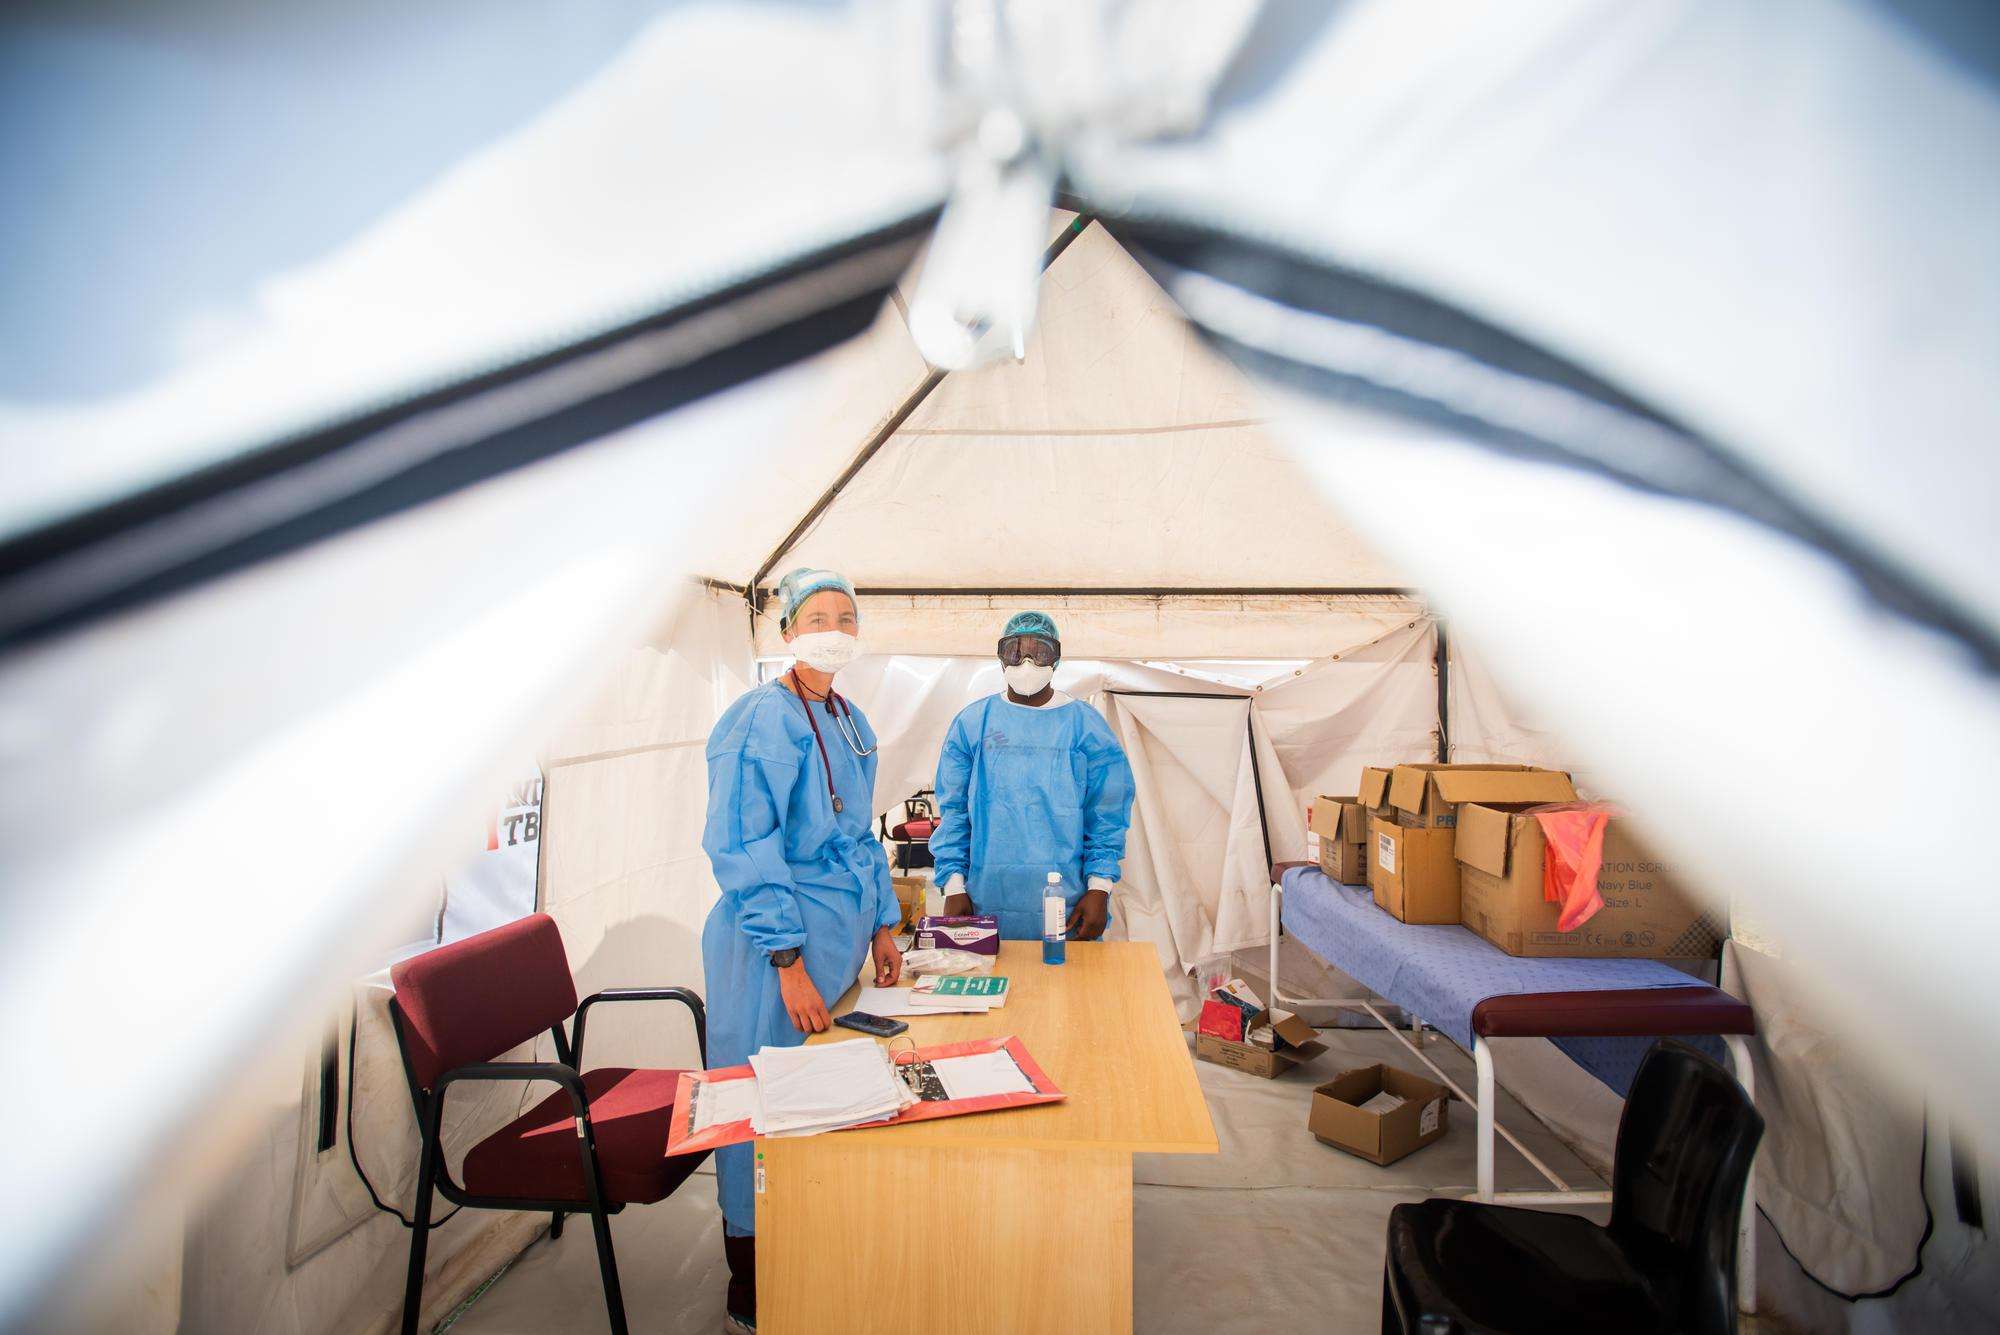 MSF’s COVID-19 field hospital; in Mbongolwane in KwaZulu-Natal